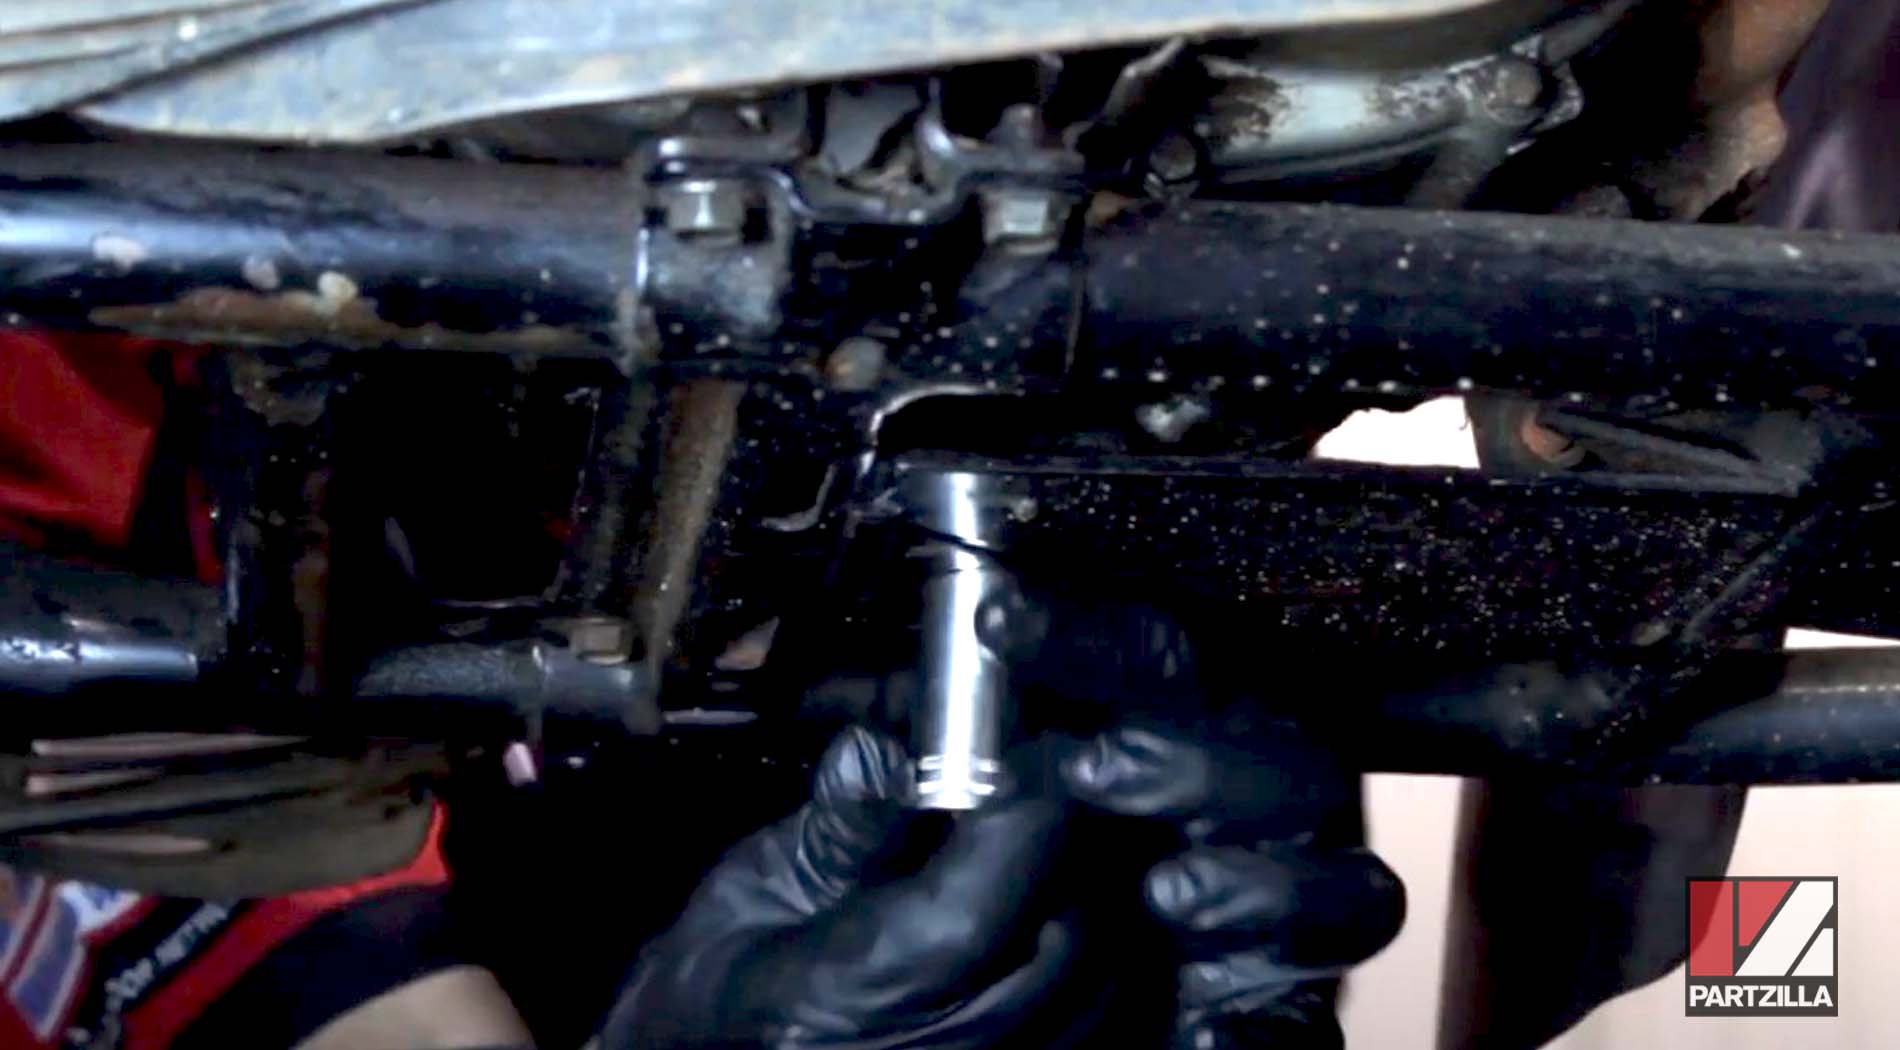 Honda TRX 300 oil change drain bolt